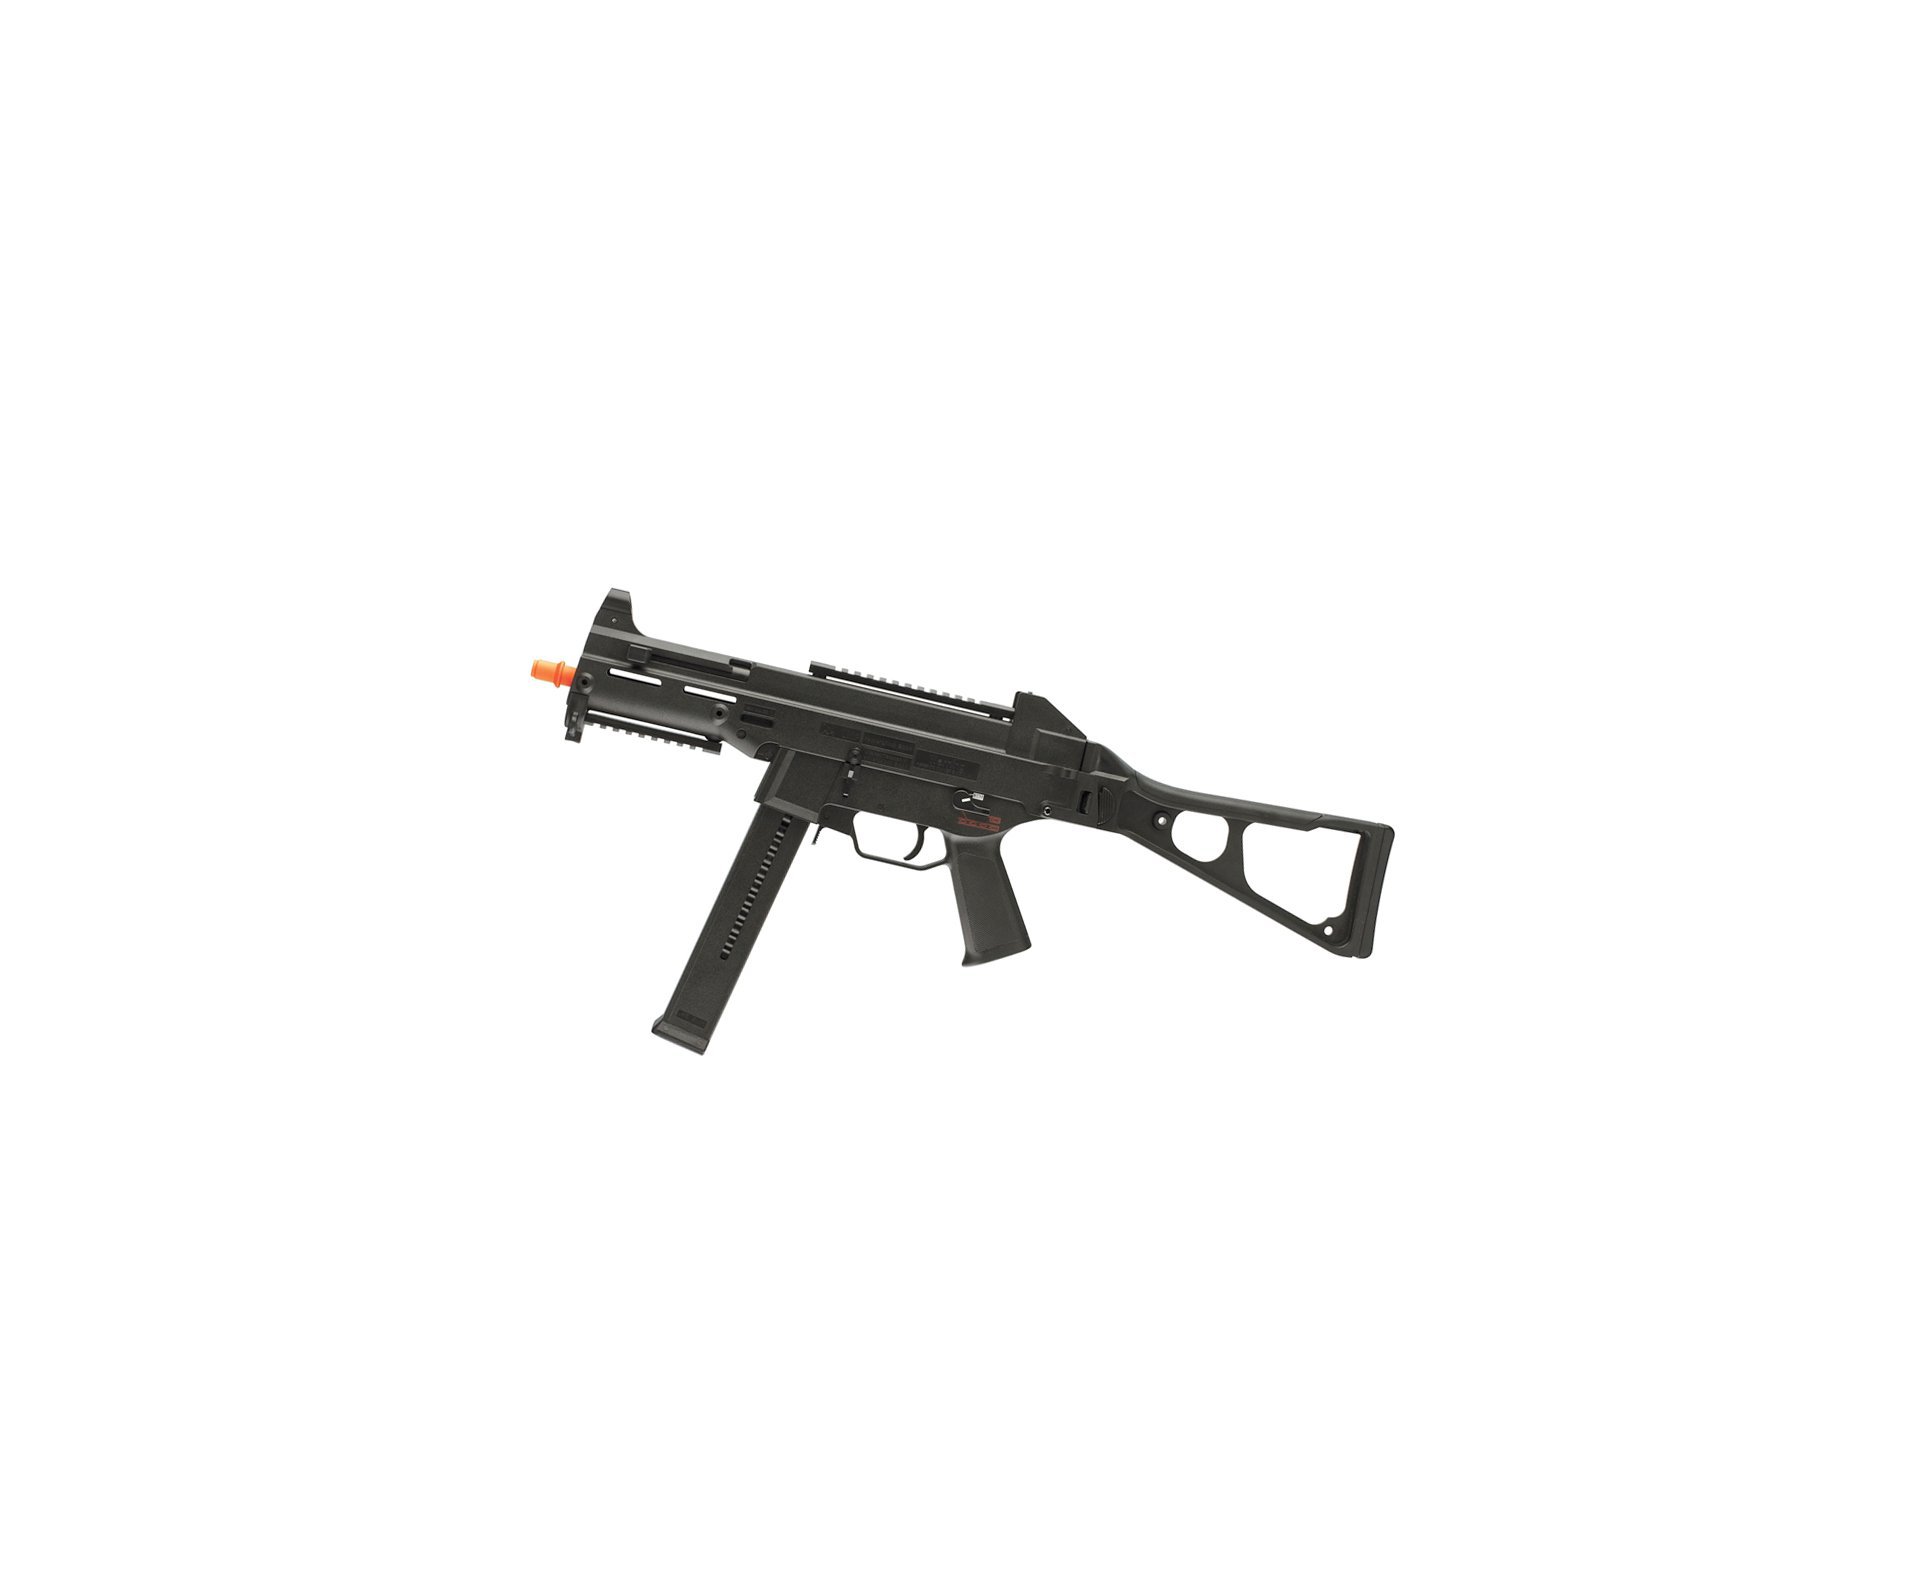 Rifle De Airsoft H&k Ump Aeg - Cal 6.0mm + Pistola Glock Cyma + Capa Hunting + 4000 Bbs 0,20g - Umarex